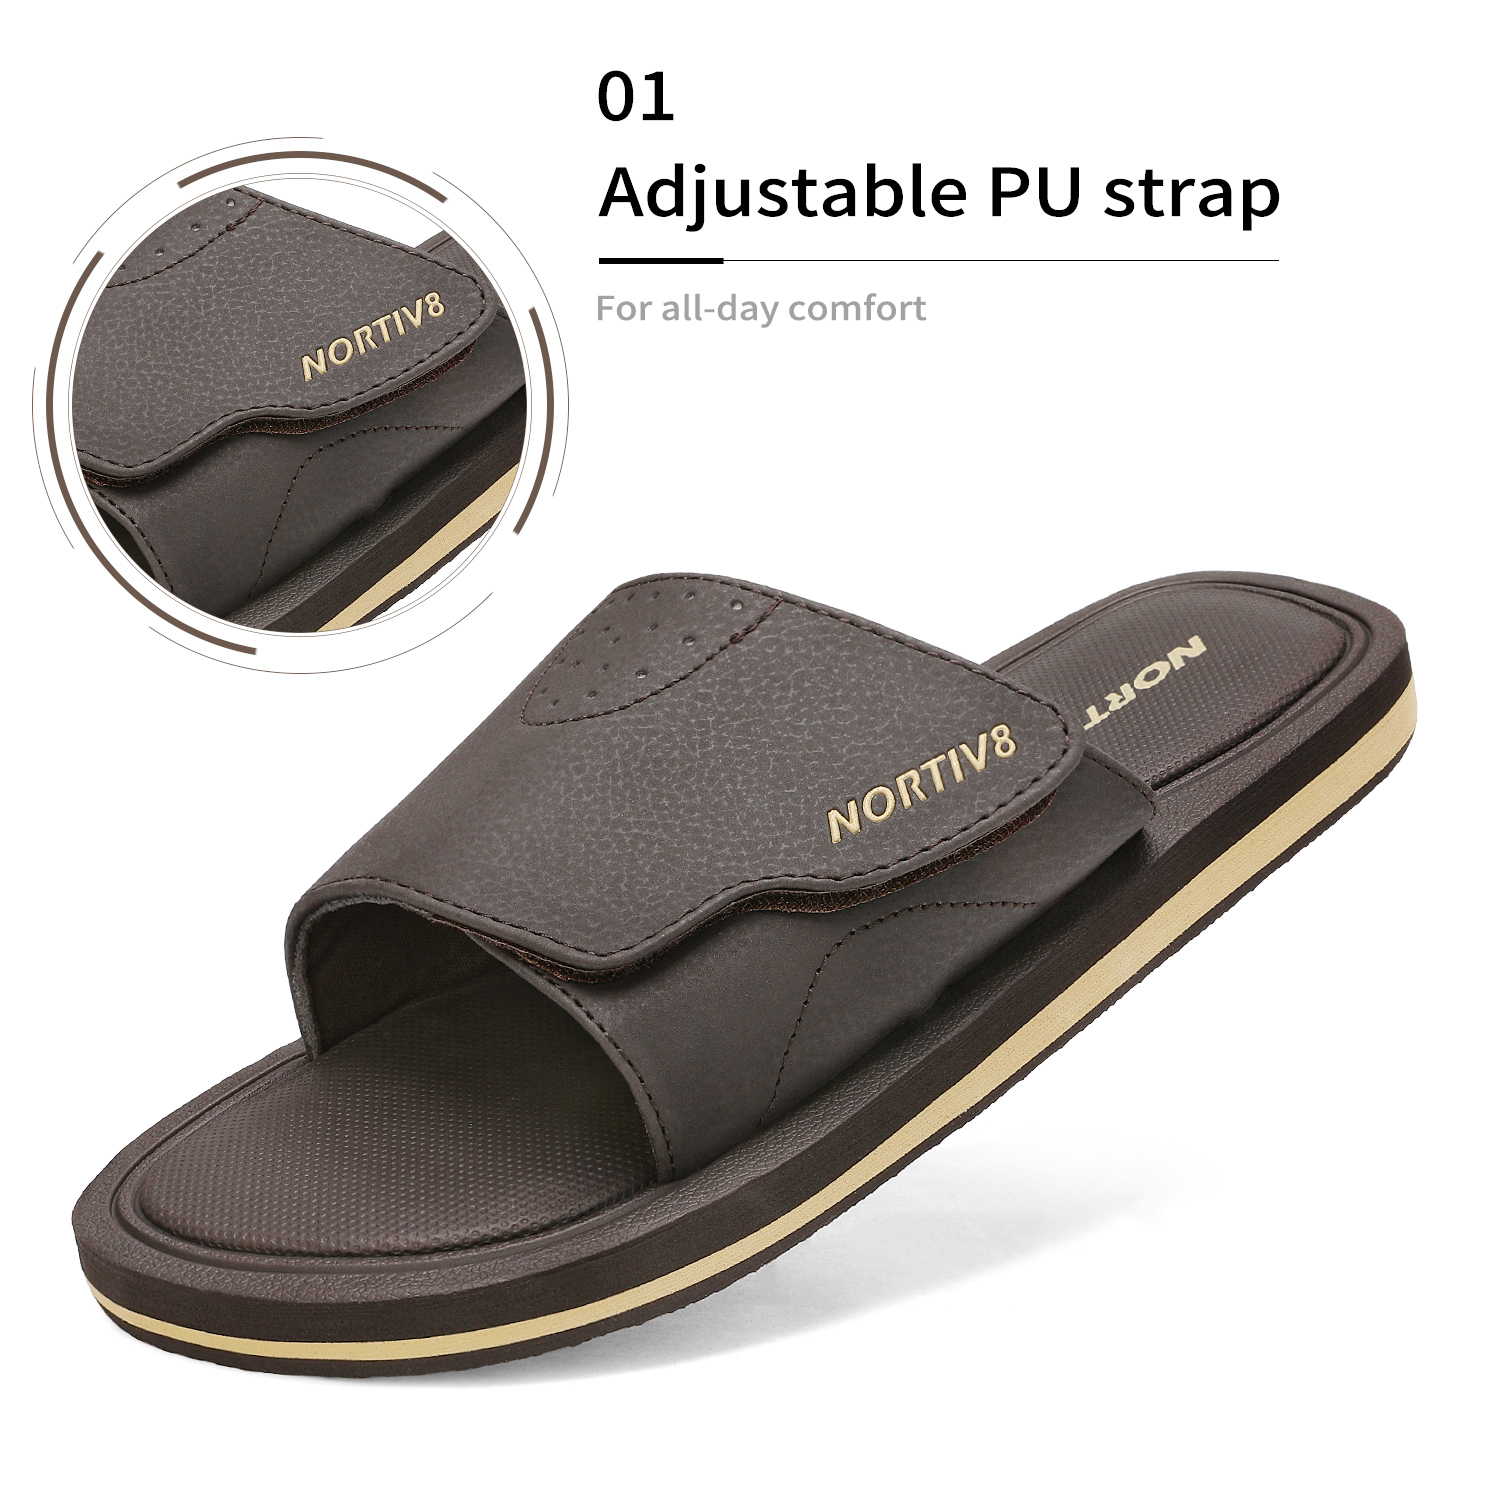 Nortiv 8 Men's Memory Foam Adjustable Slide Sandals Comfort Lightweight Beach Shoes Summer Outdoor Slipper Fusion Dark/Brown Size 8 - image 4 of 5